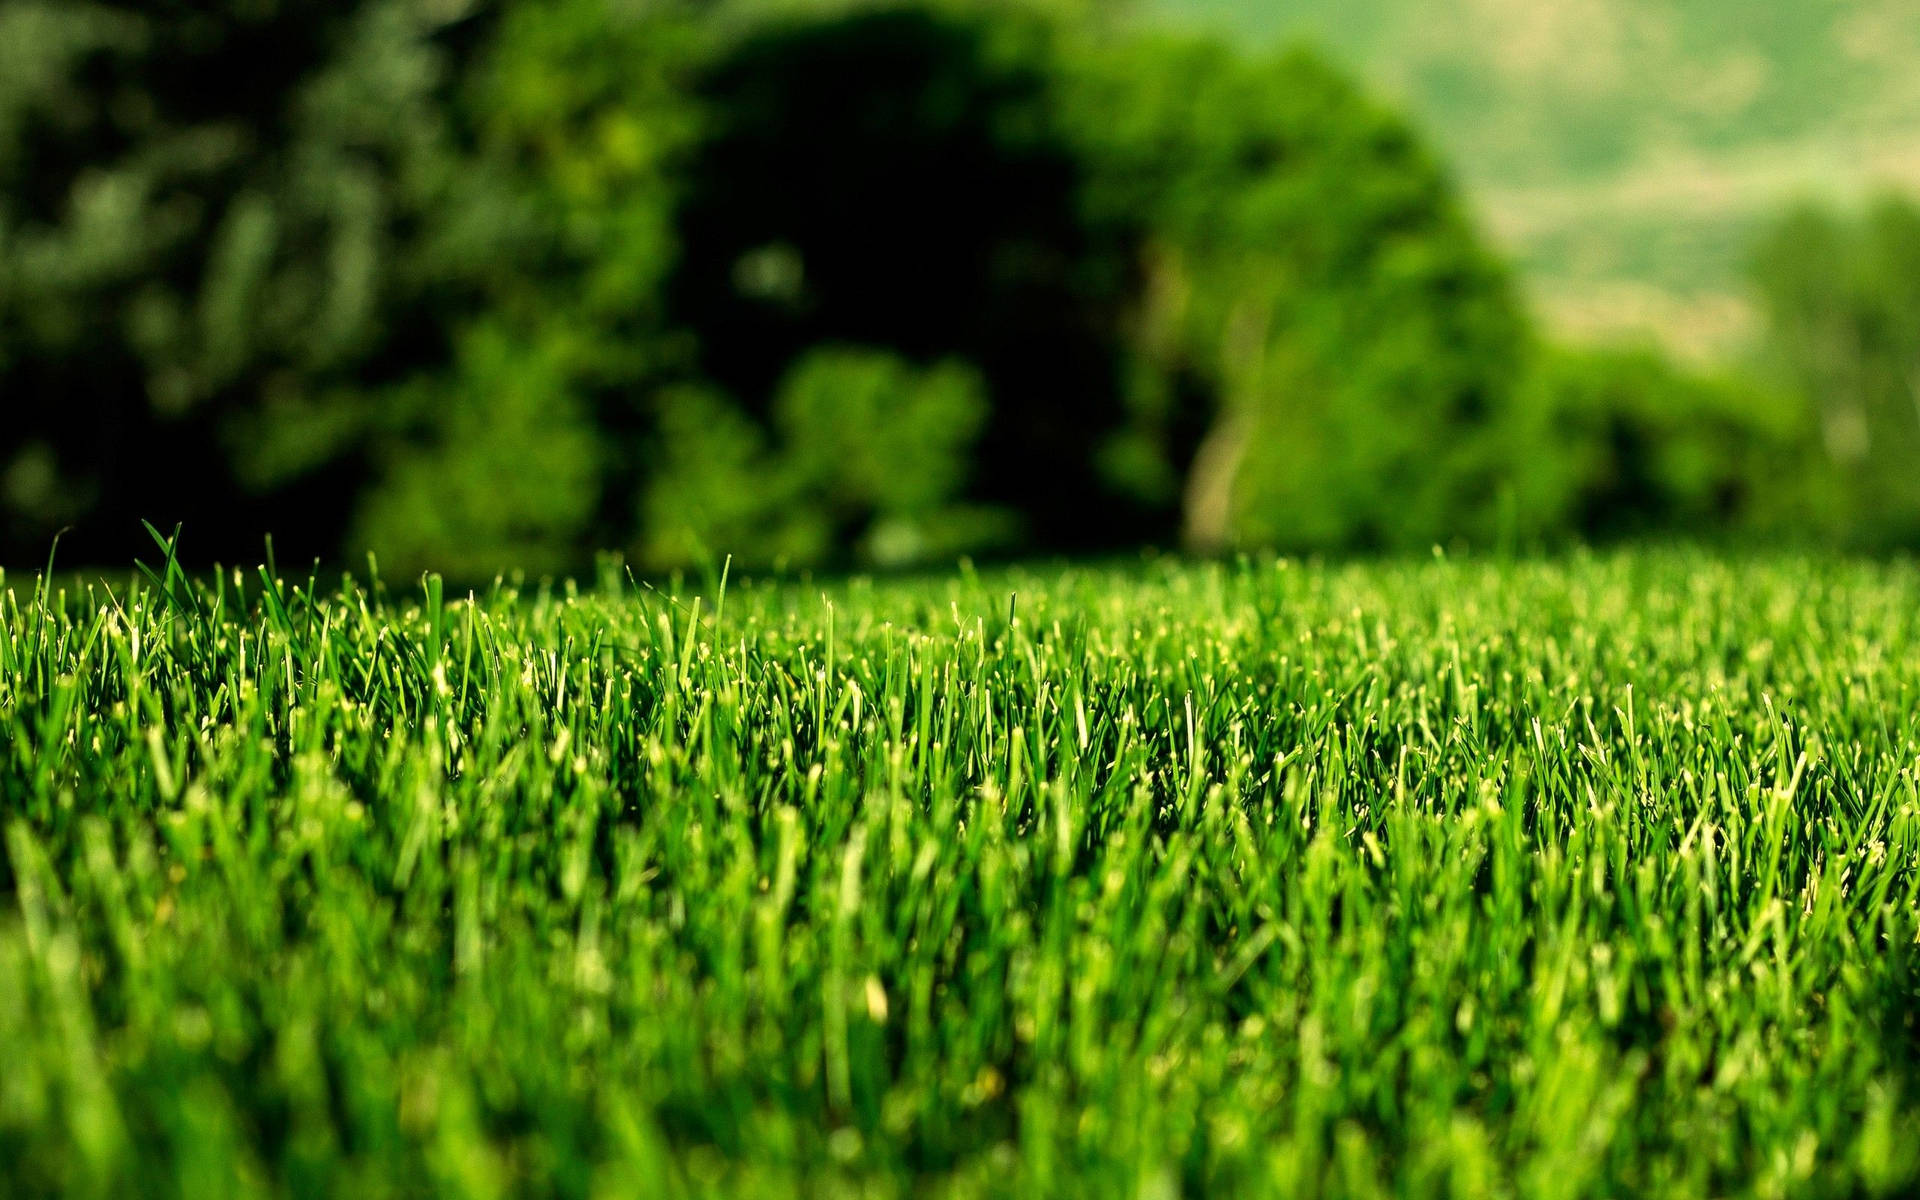 "Nature'sblanket: A lush green field of grass." Wallpaper